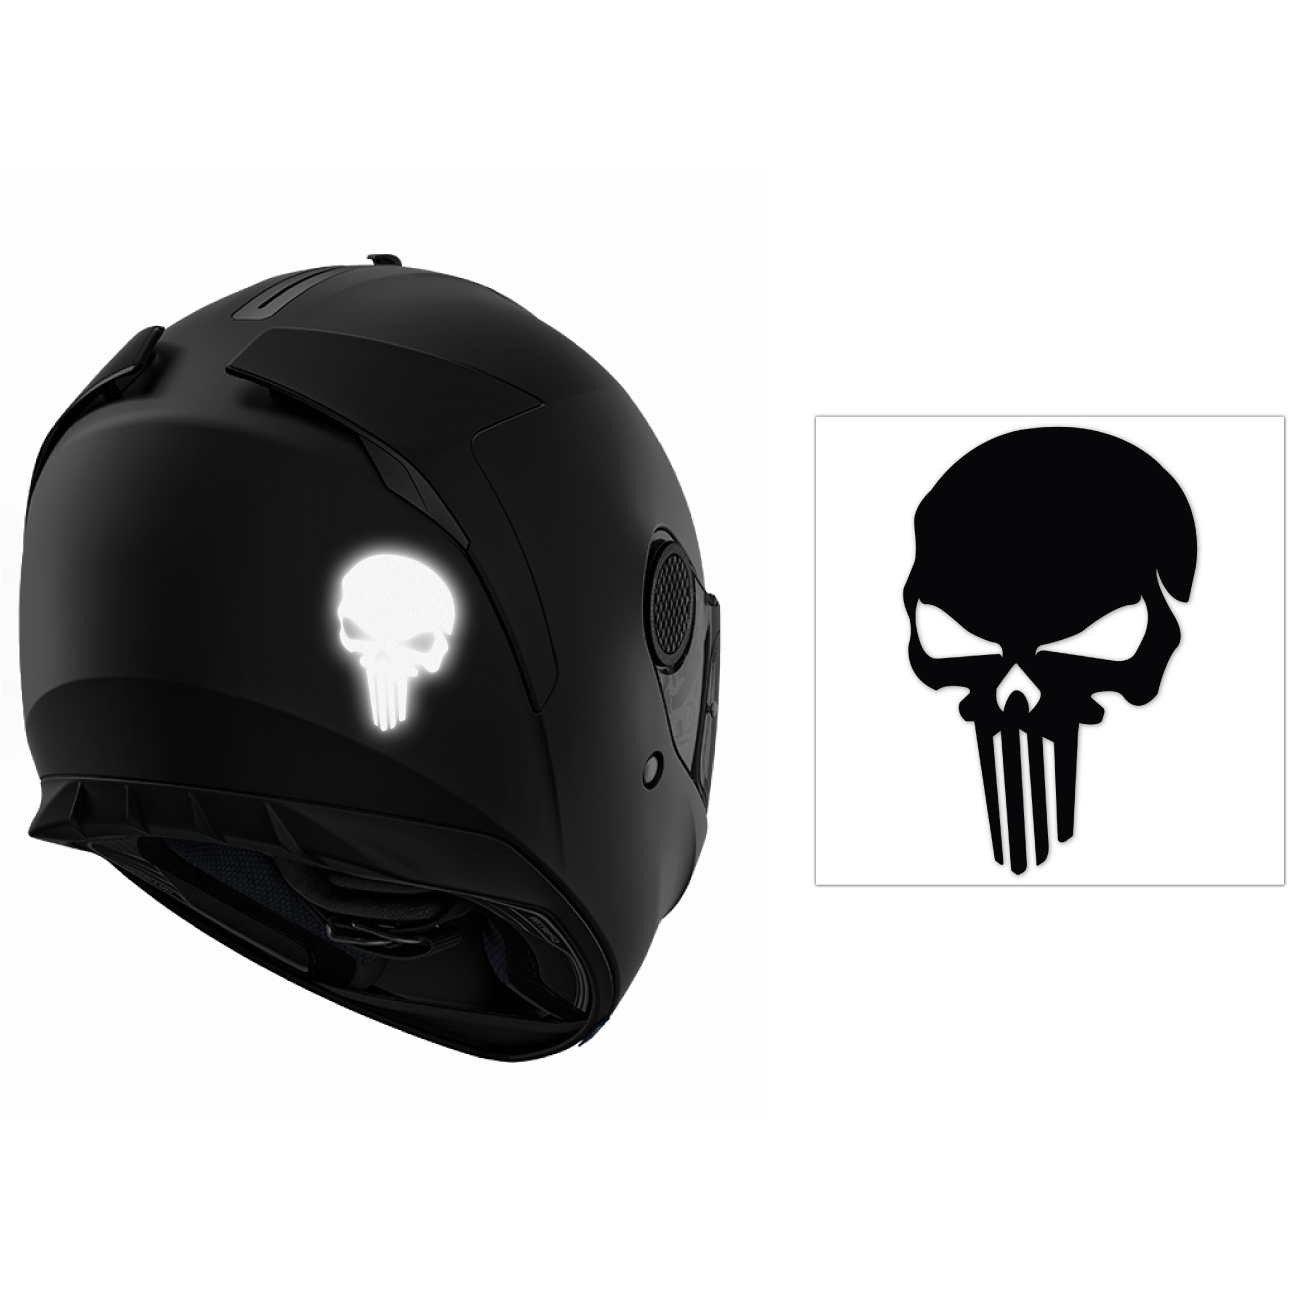 Autocollant Crâne skull tête mort casque moto stickers adhesif